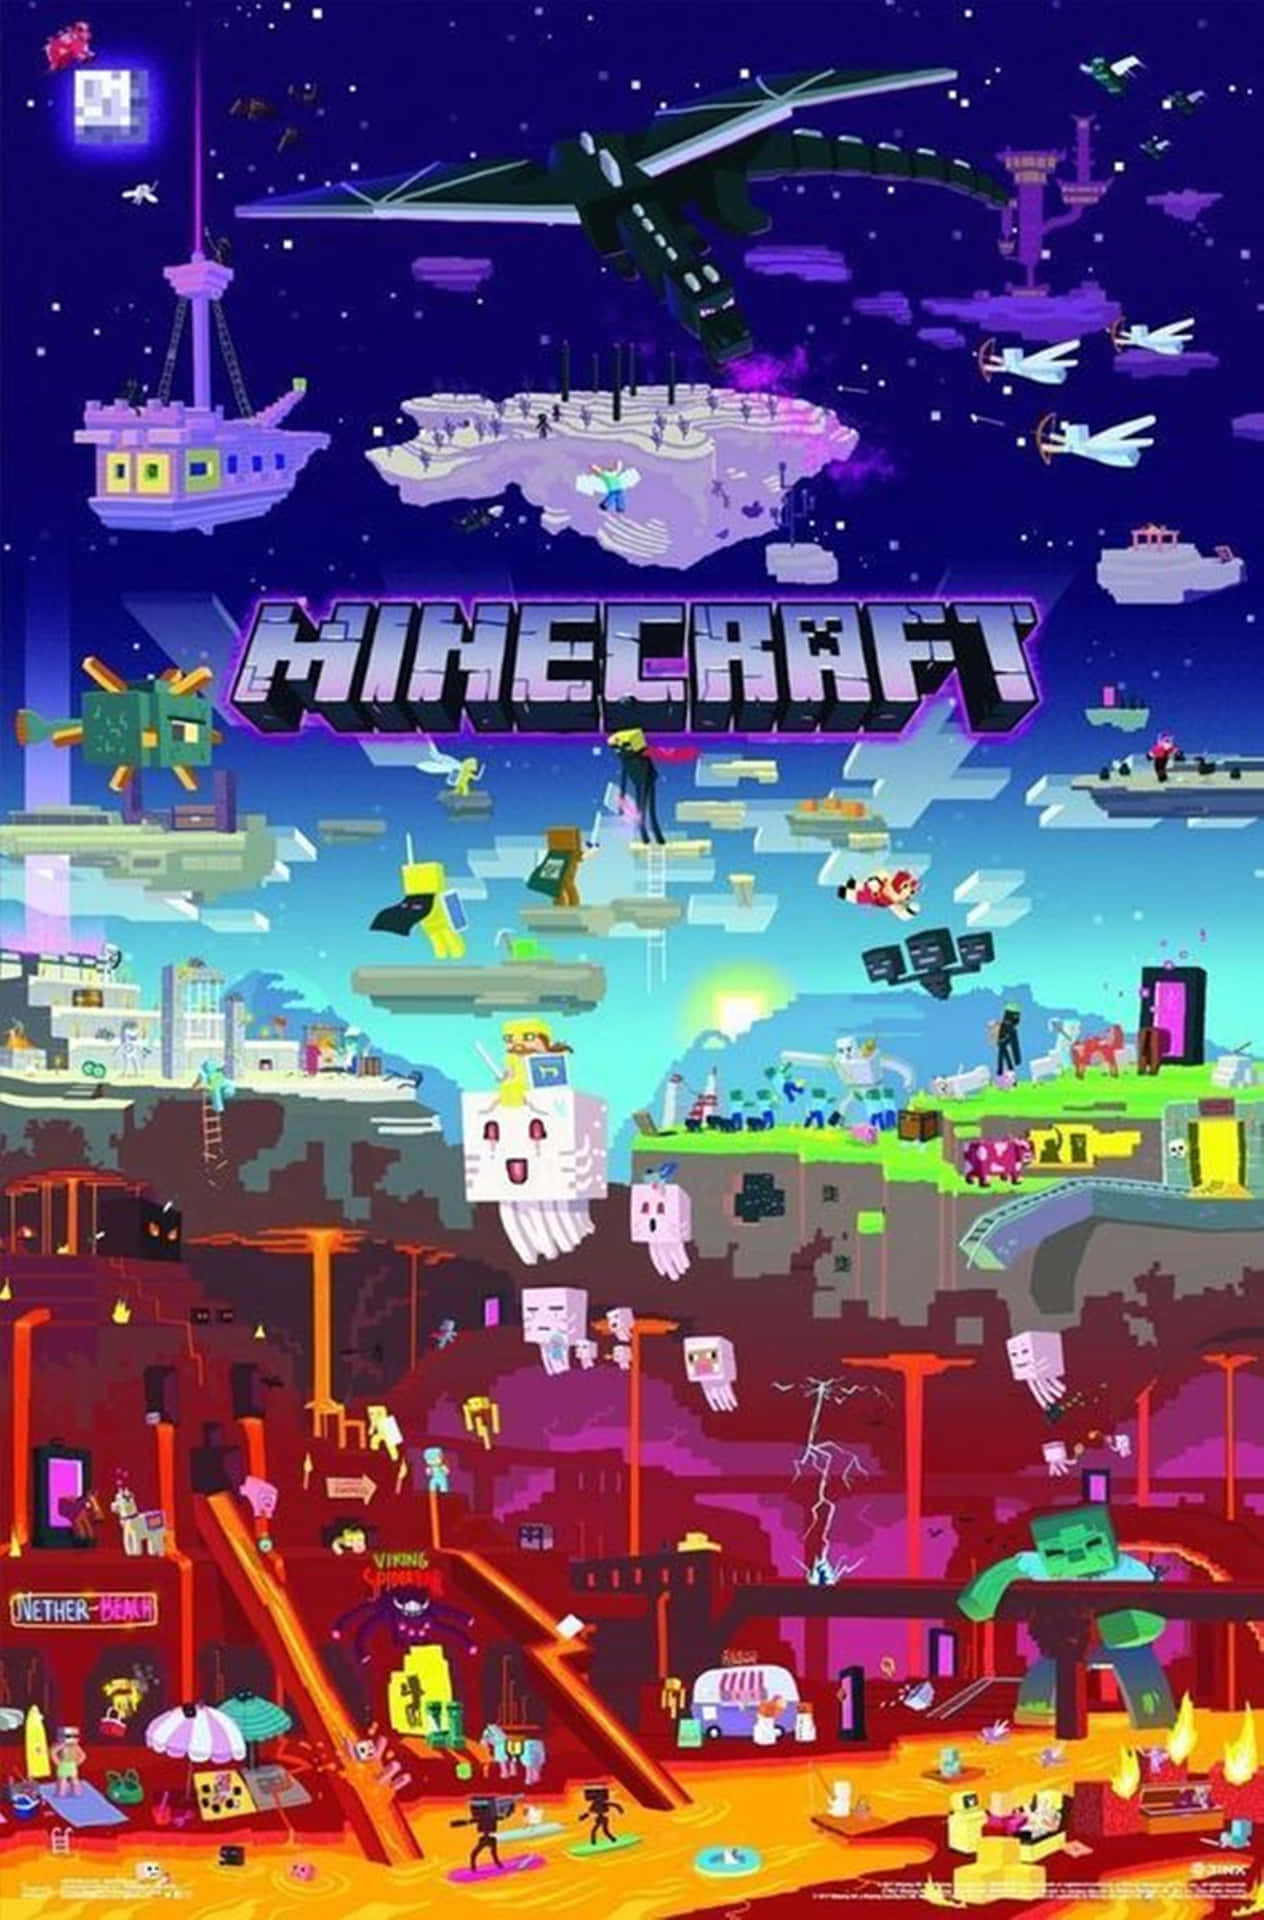 Minecraft - The Movie Poster Wallpaper